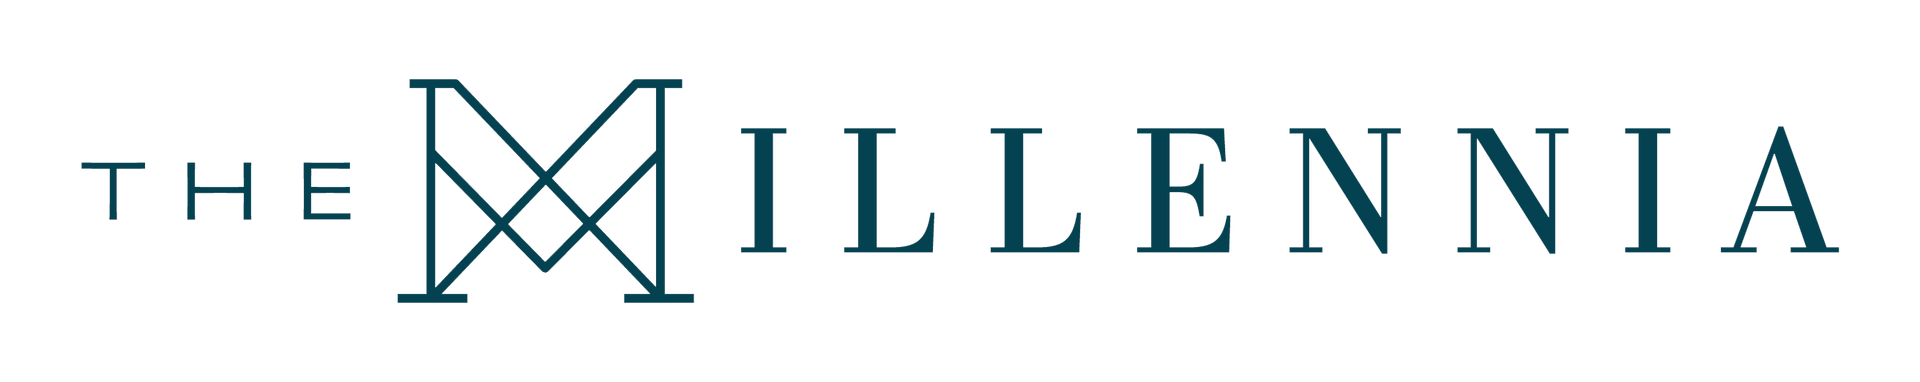 The Millennia Logo - header, go to homepage